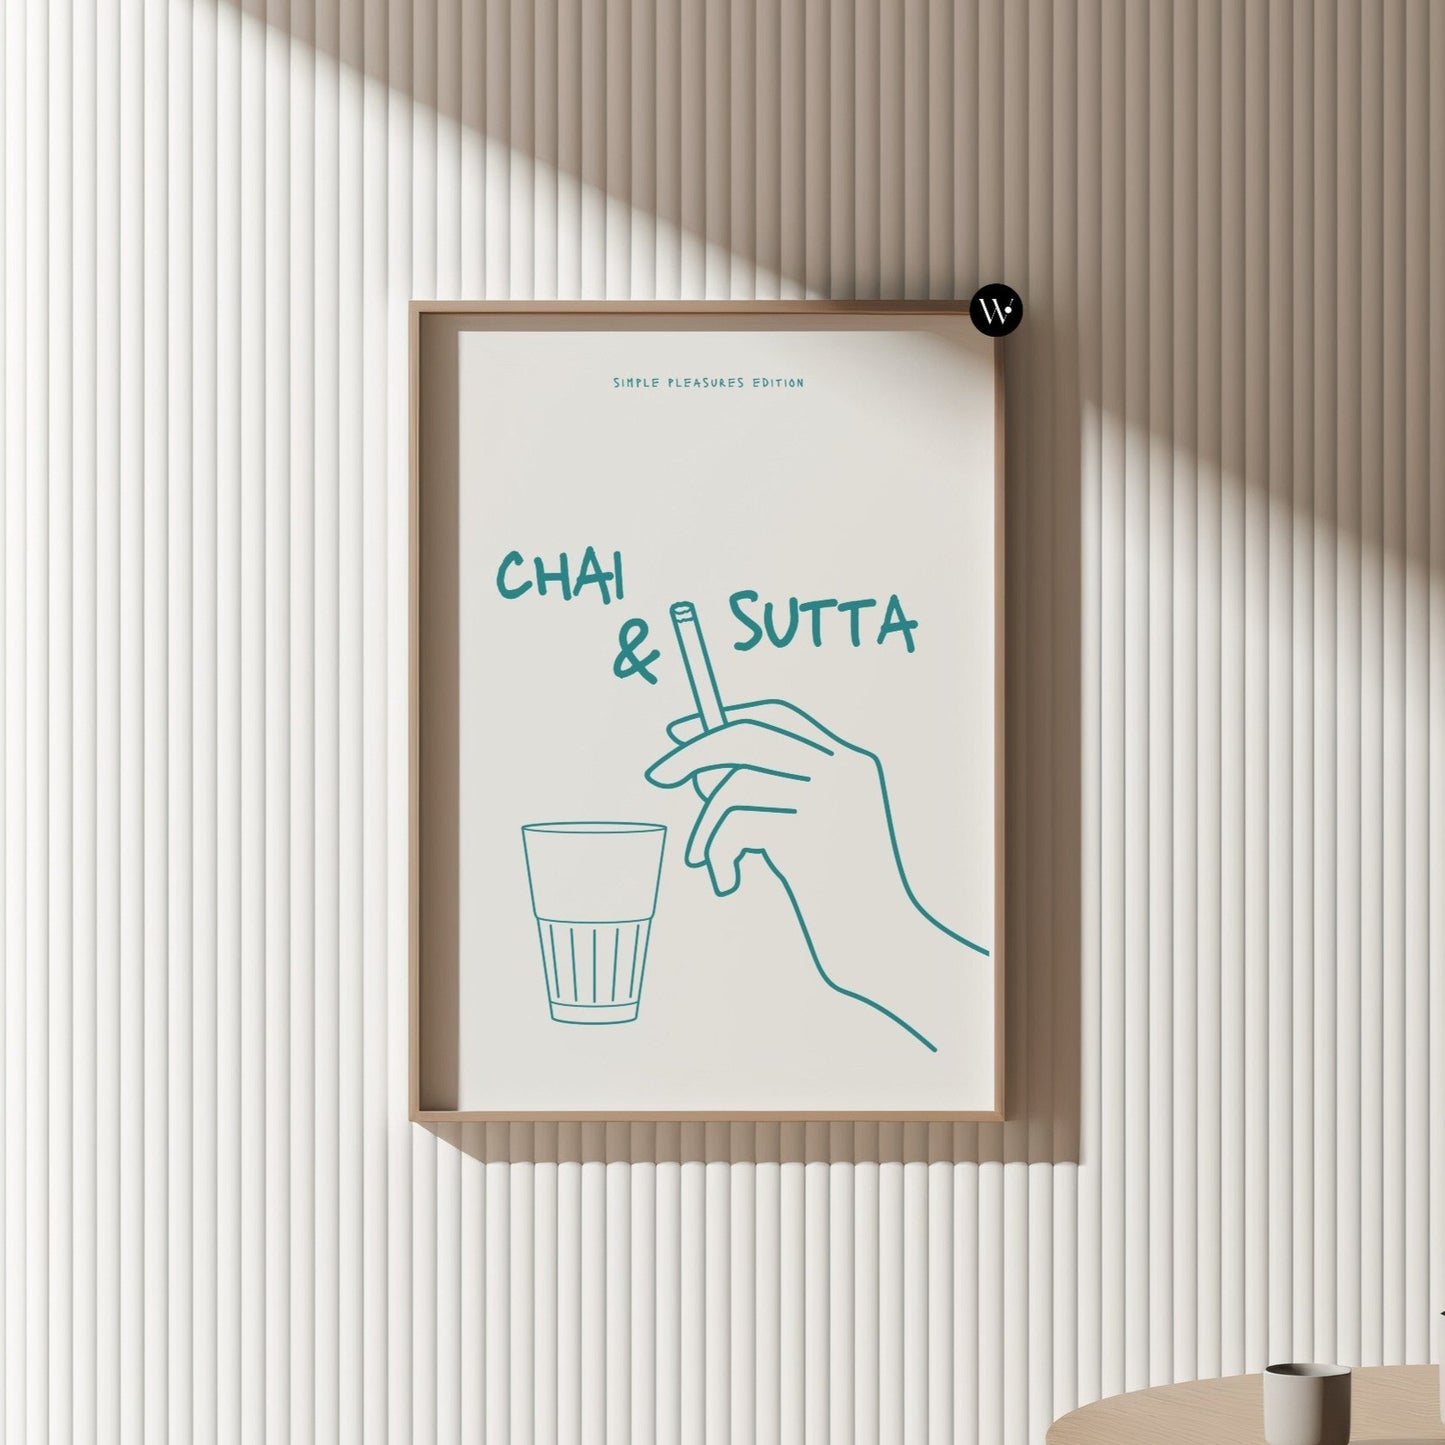 Chai & Sutta Poster Print | Simple Pleasures Edition